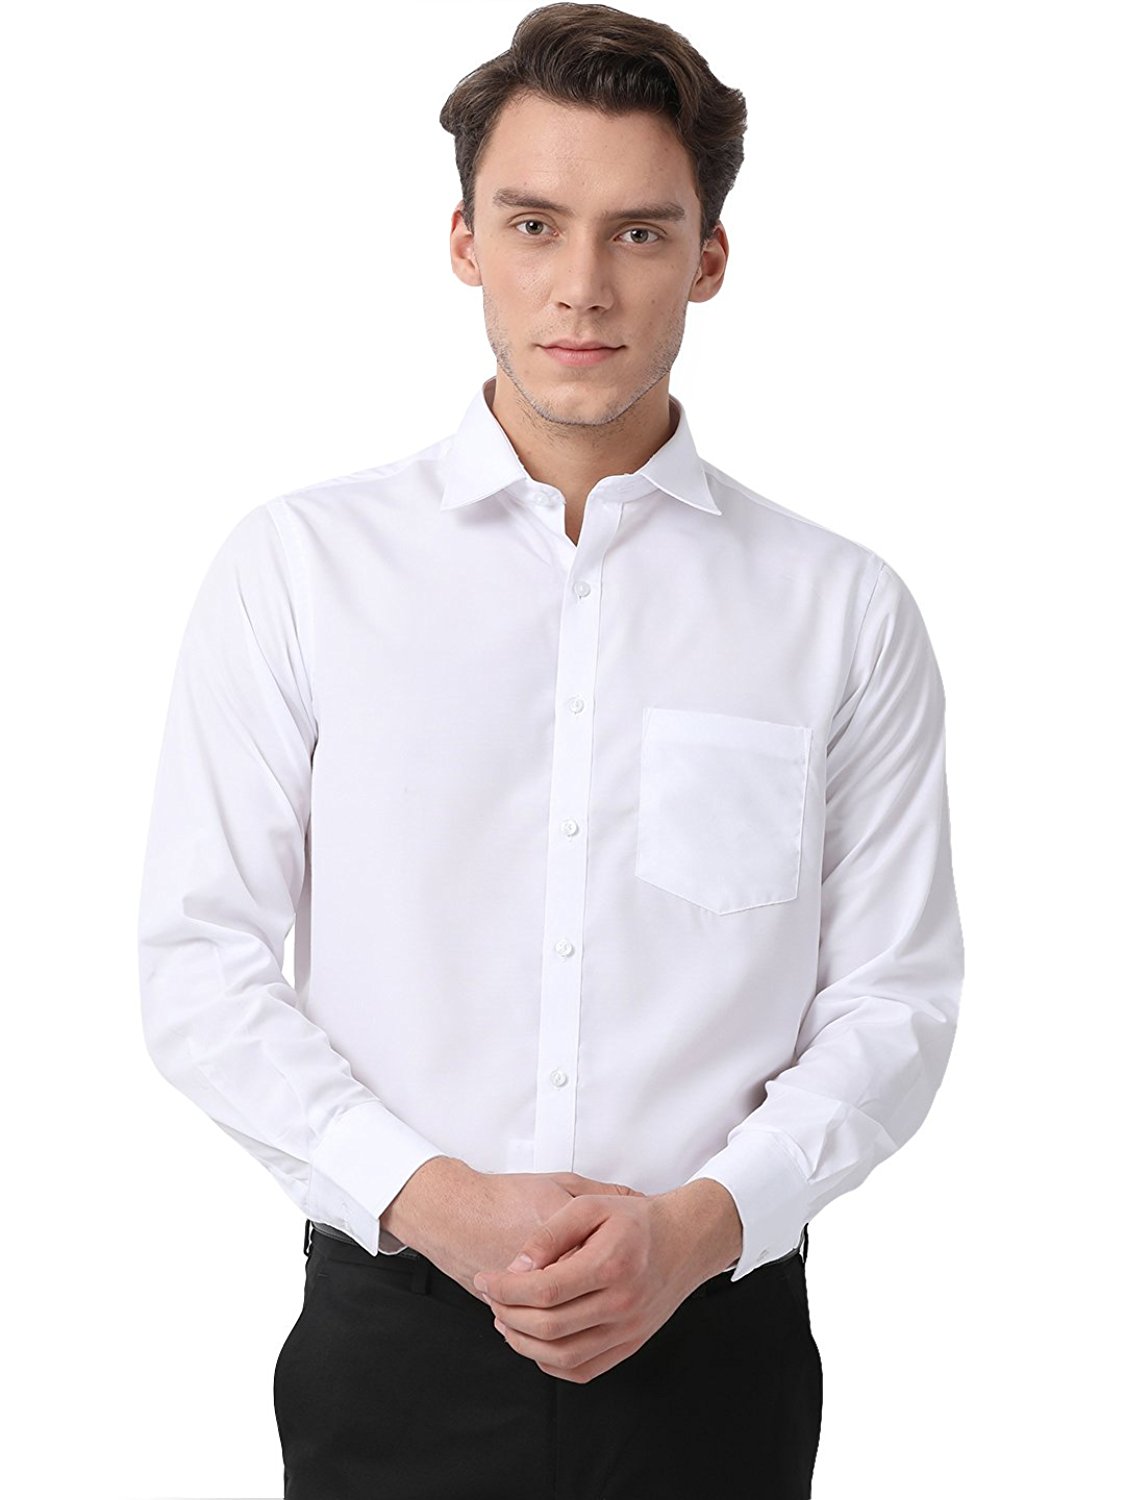 Pan American WhIte Formal Shirts for Men's 